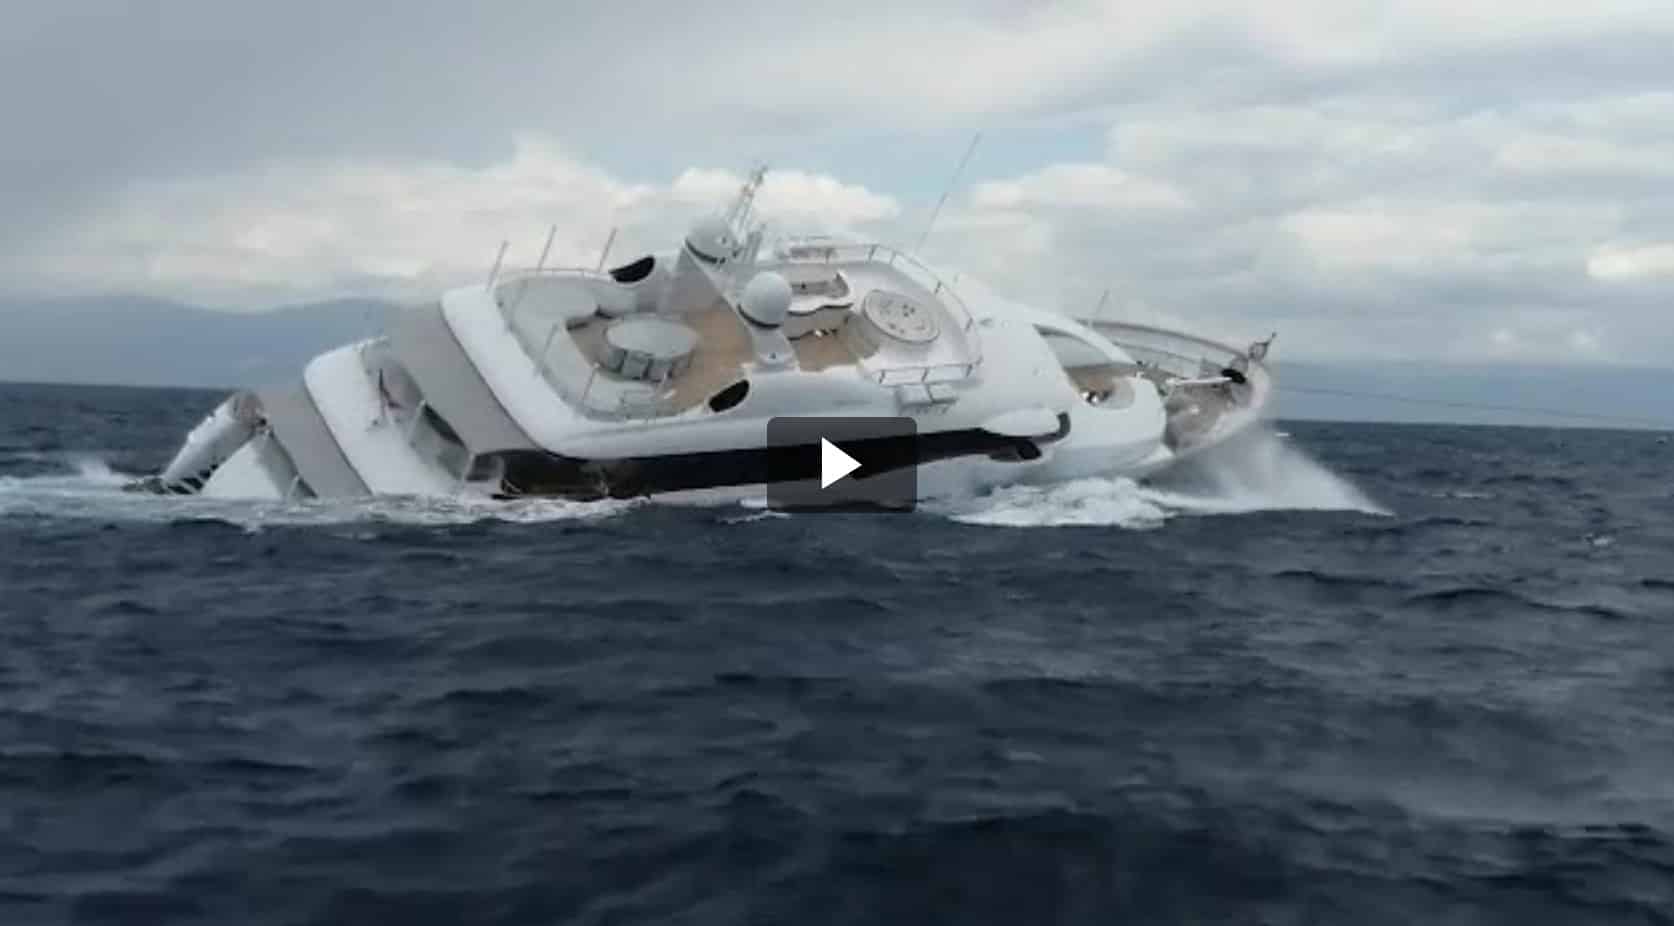 essence yacht sinking